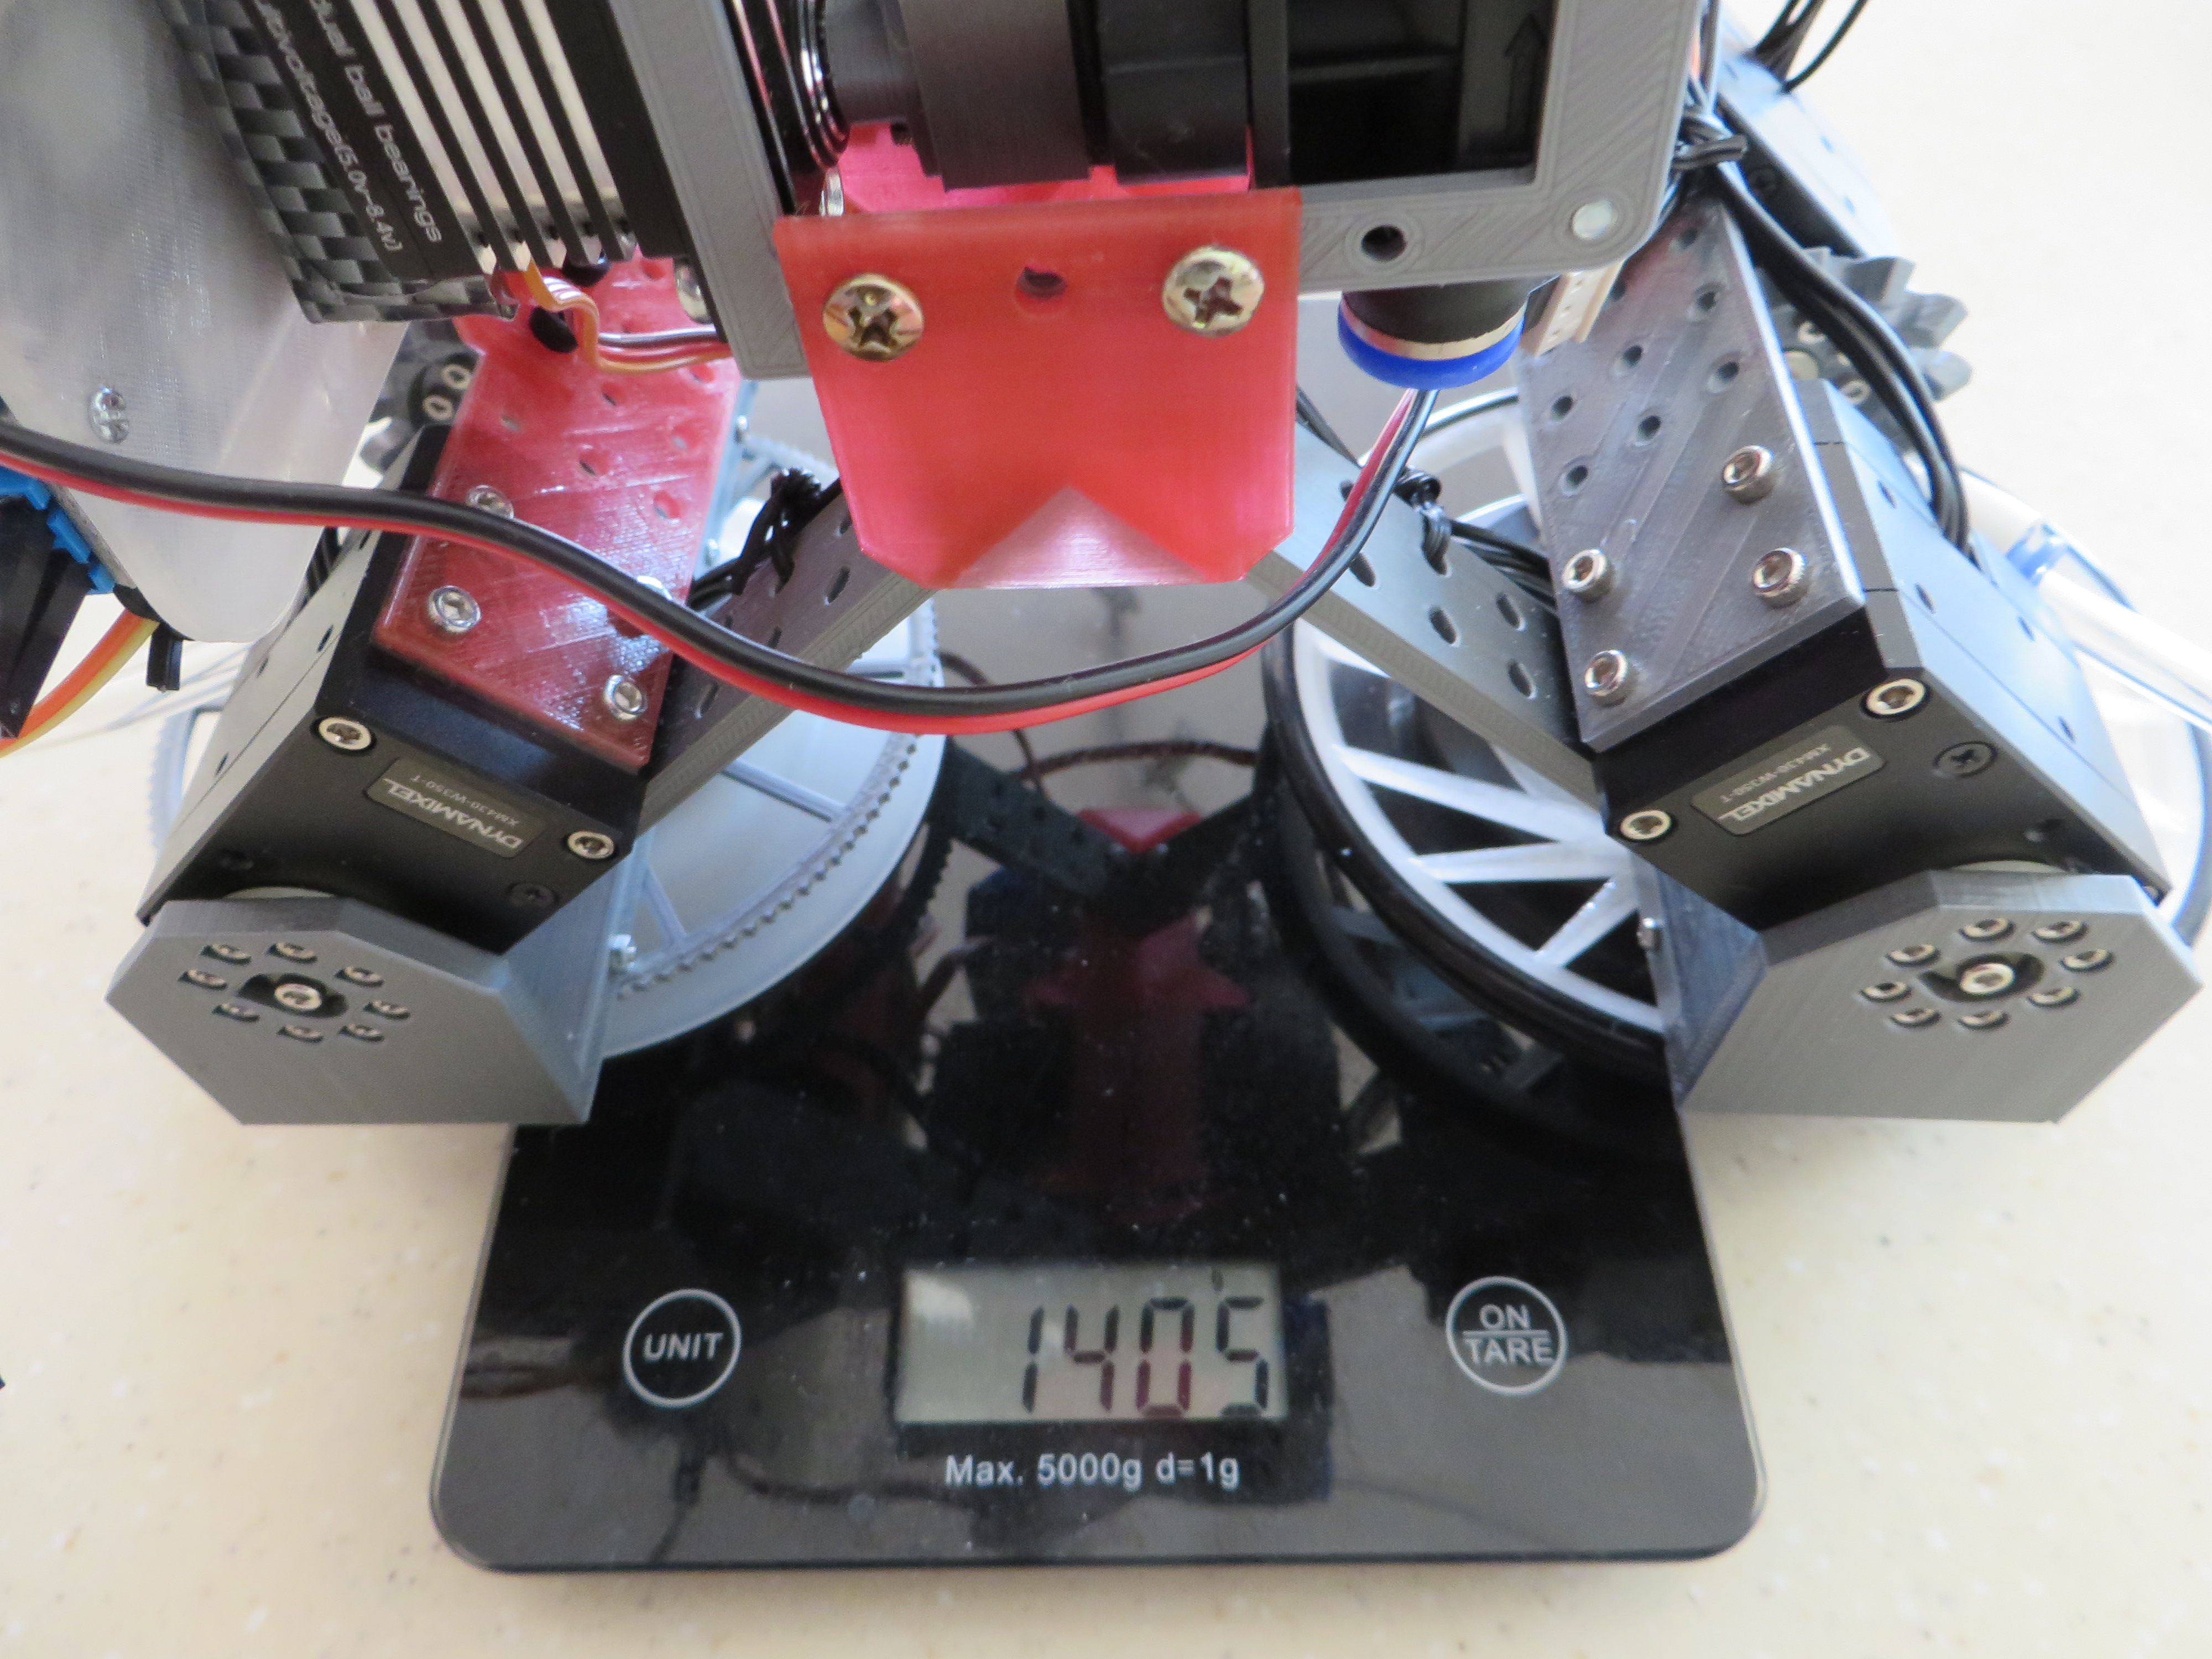 Overall robot weight